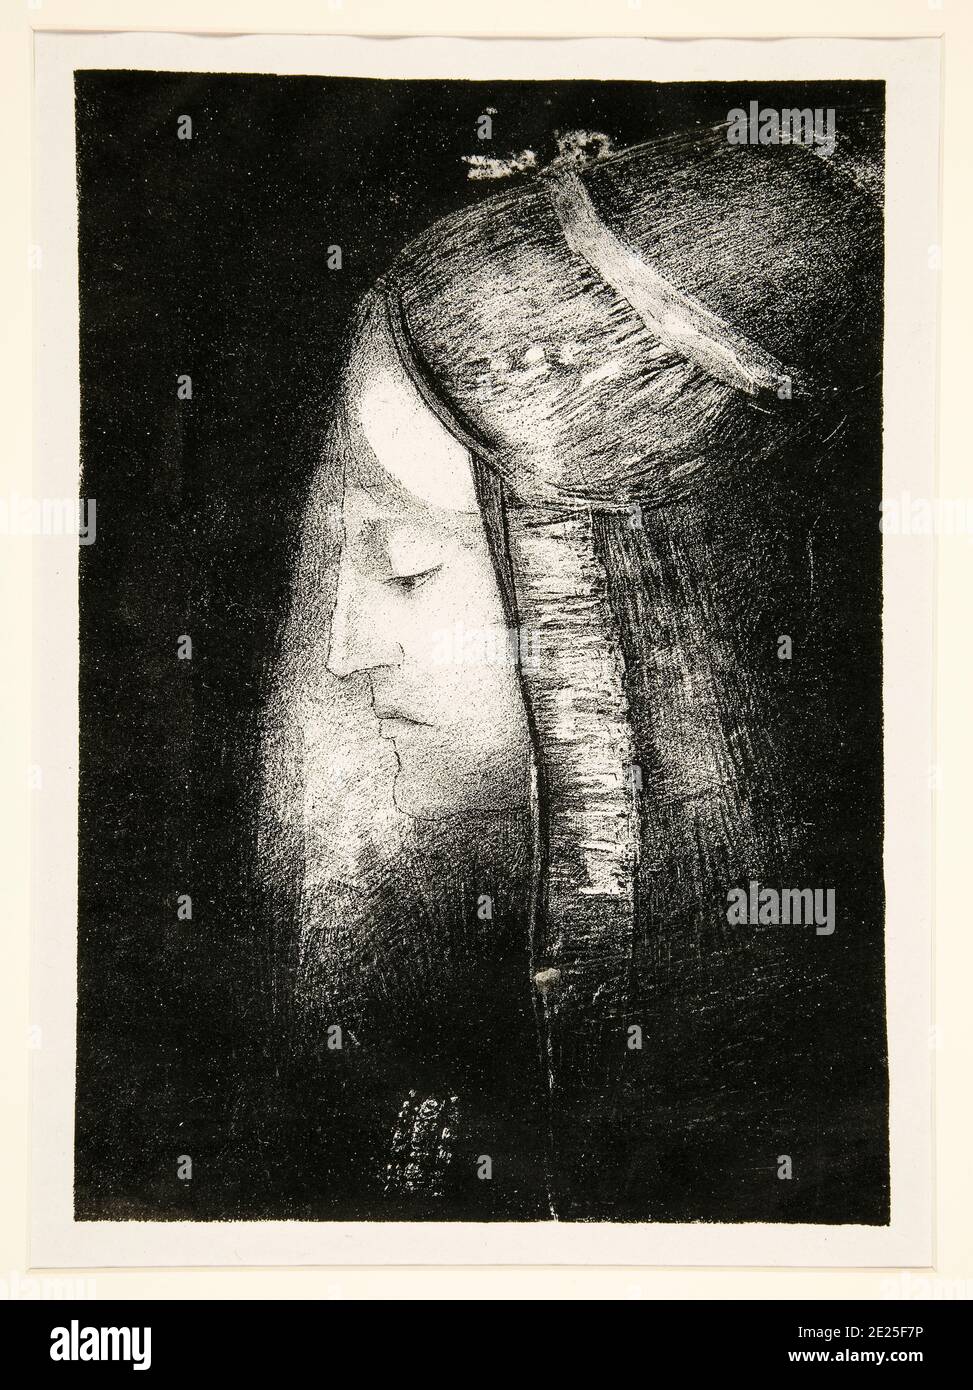 Odilon Redon, Profil de lumière (Profile of Light), lithograph, 1886 Stock Photo